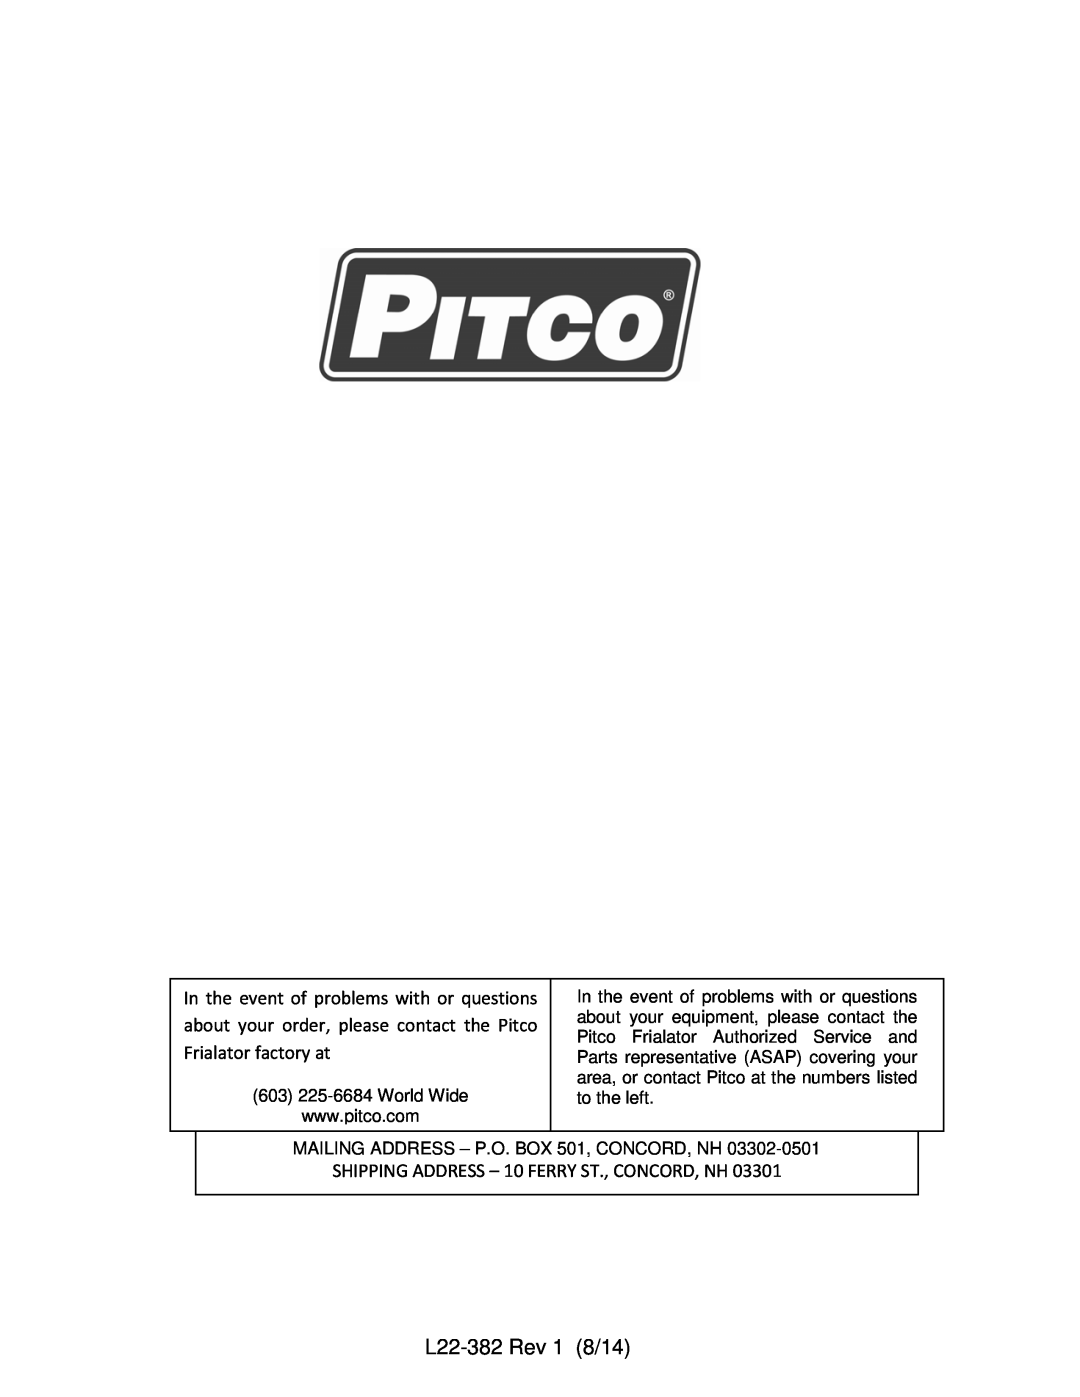 Pitco Frialator VF35 manual L22-382Rev 1 8/14, SHIPPING ADDRESS – 10 FERRY ST., CONCORD, NH 